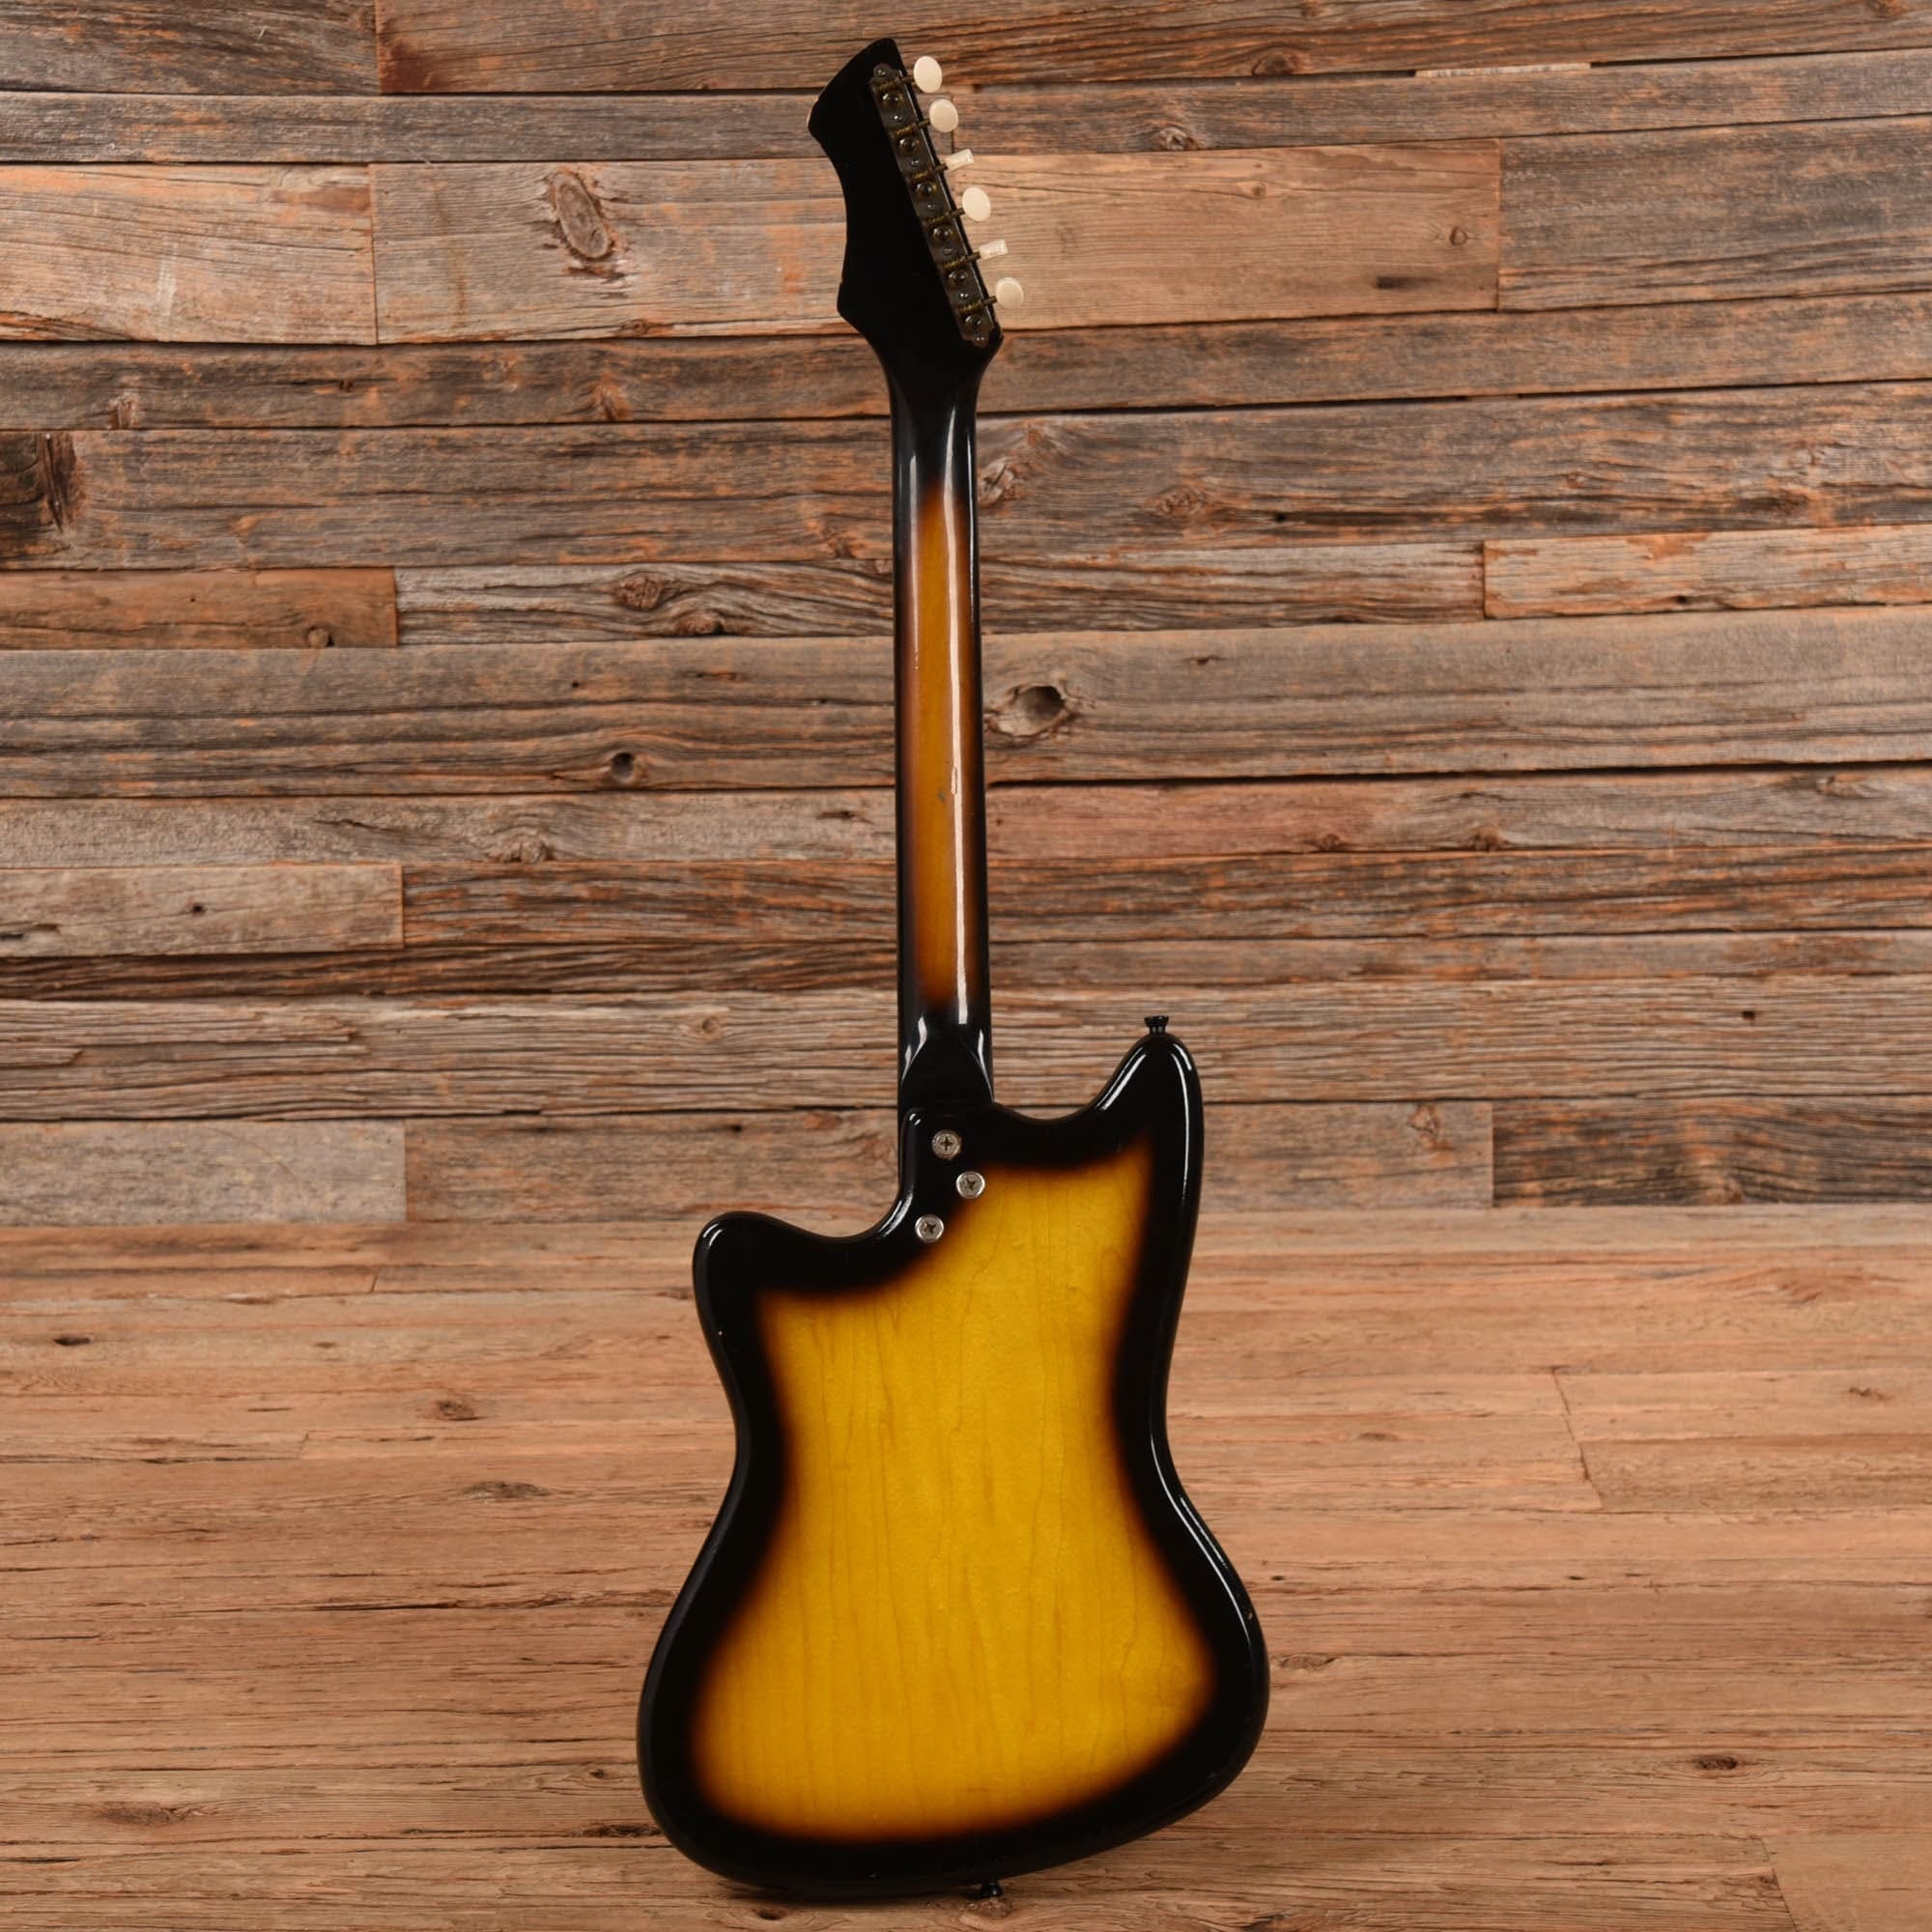 Harmony Bobkat Sunburst 1960s Electric Guitars / Solid Body